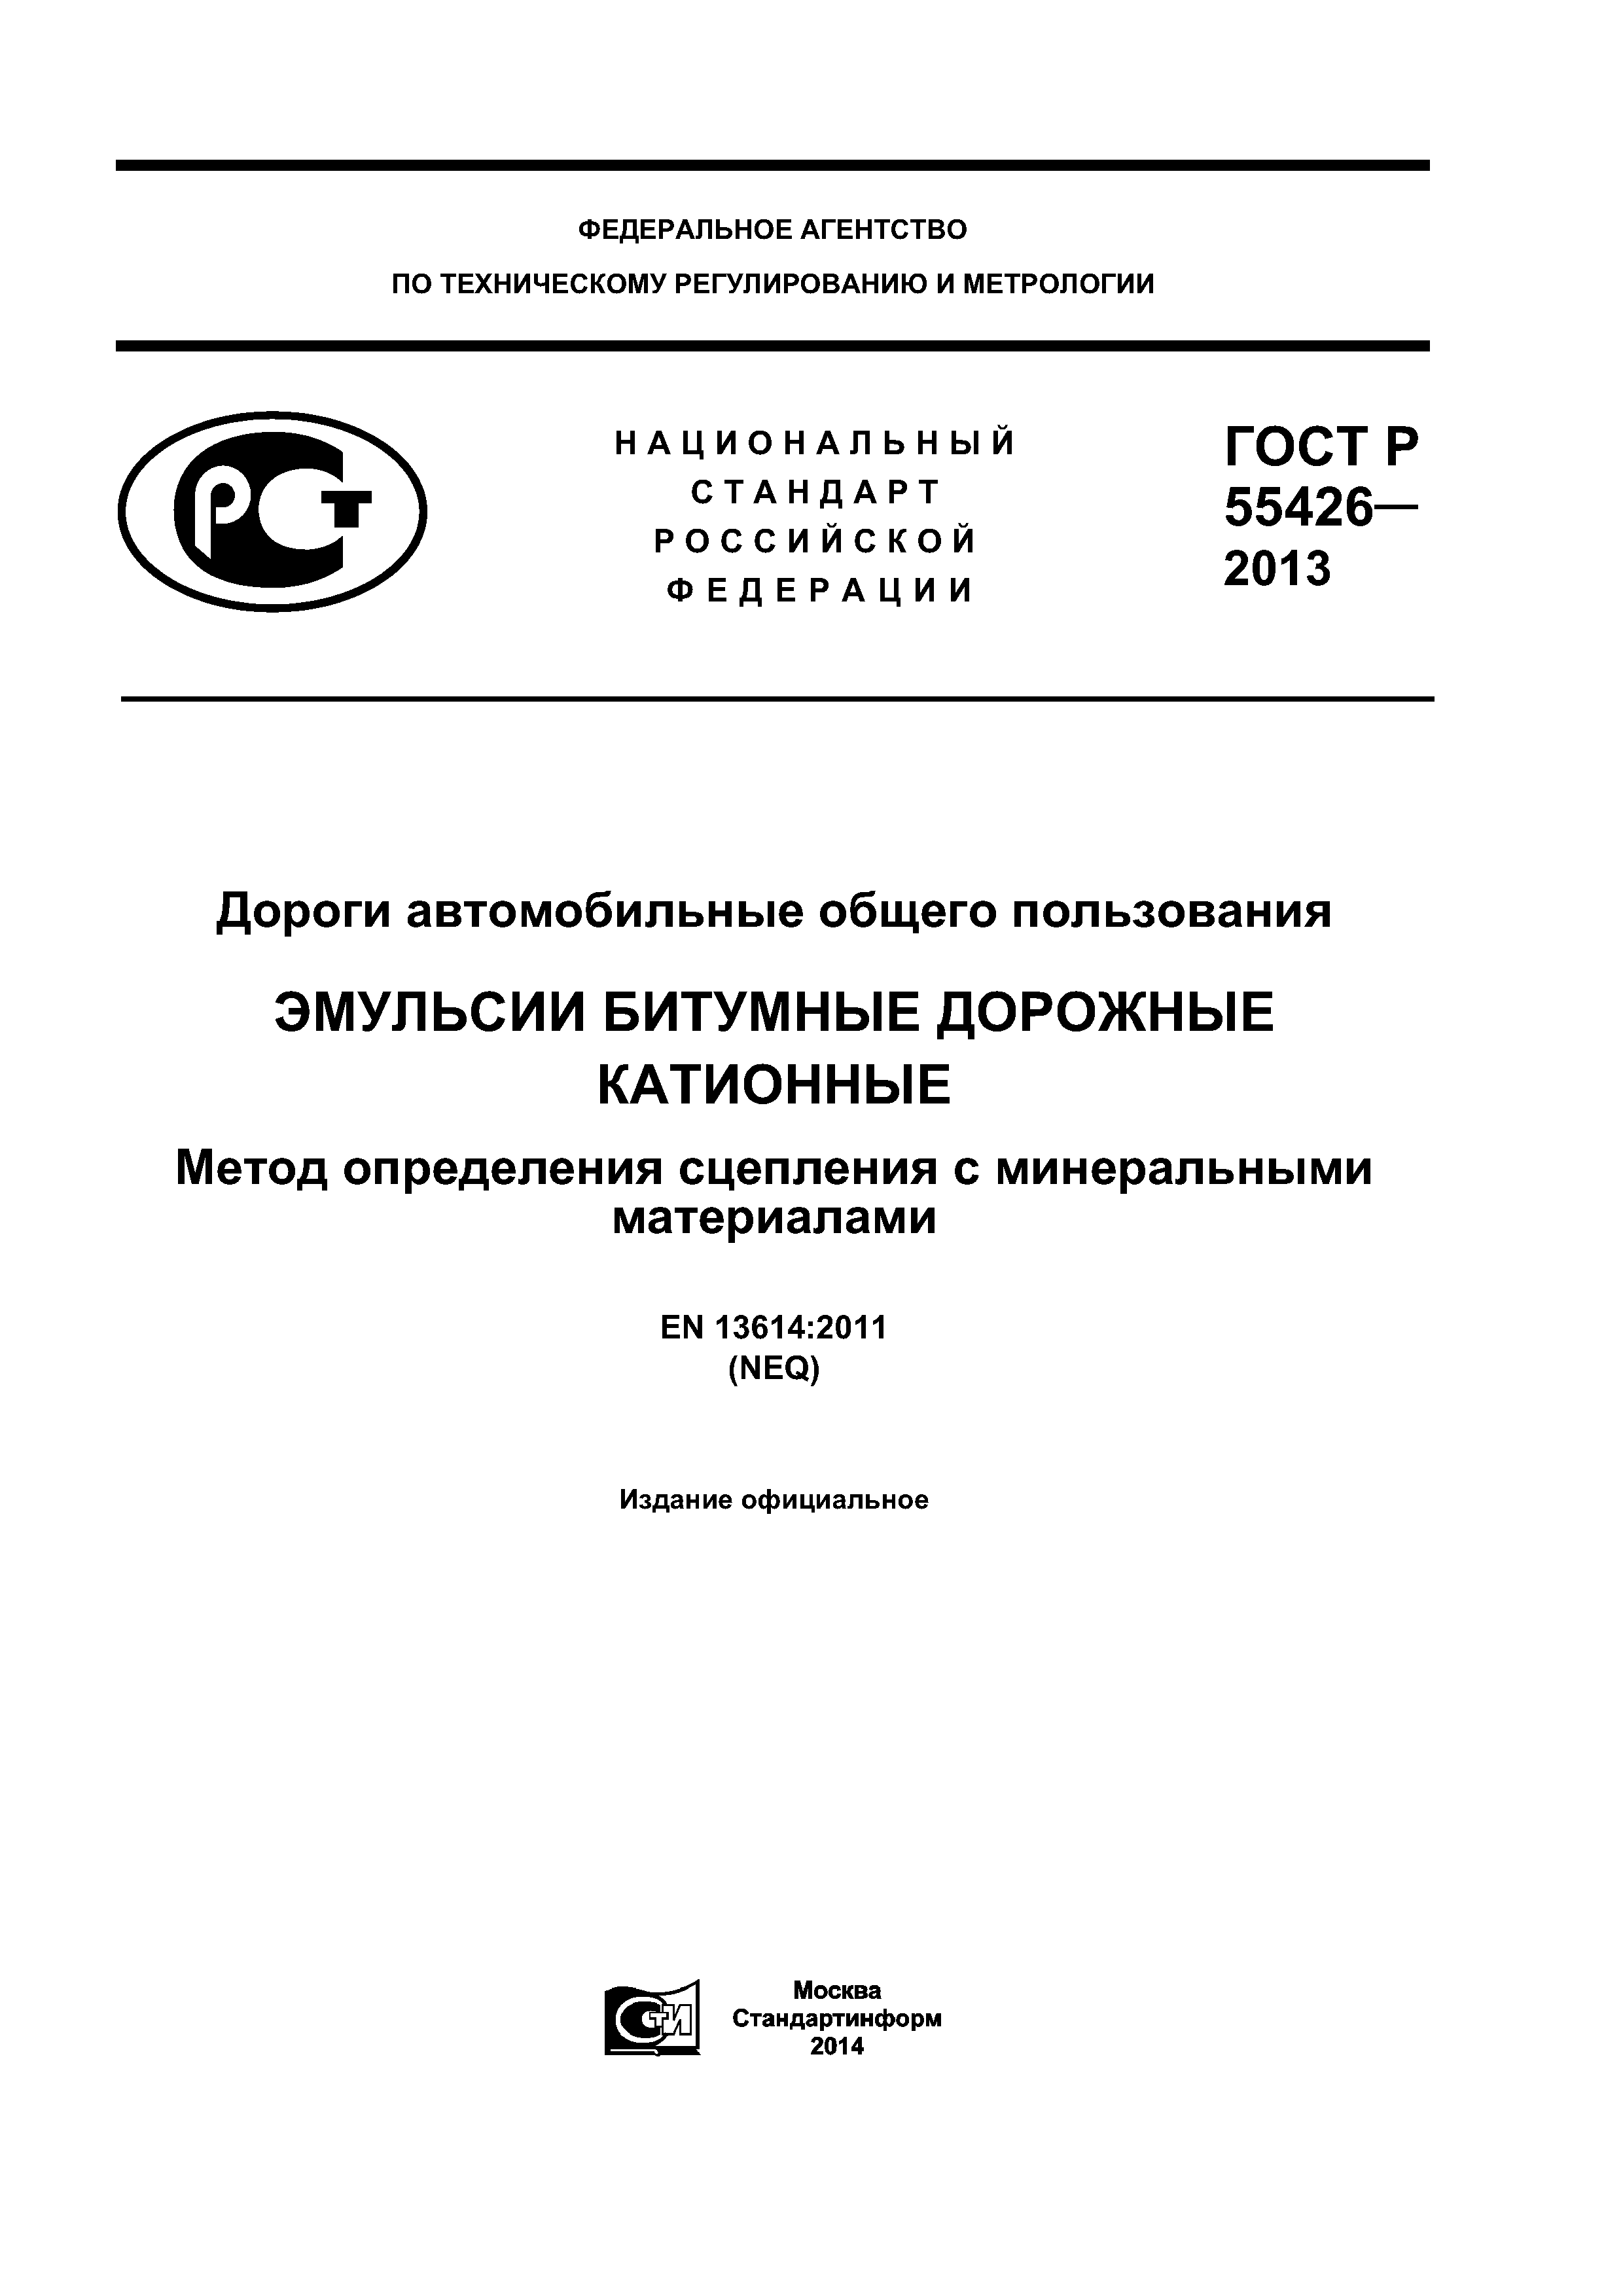 ГОСТ Р 55426-2013